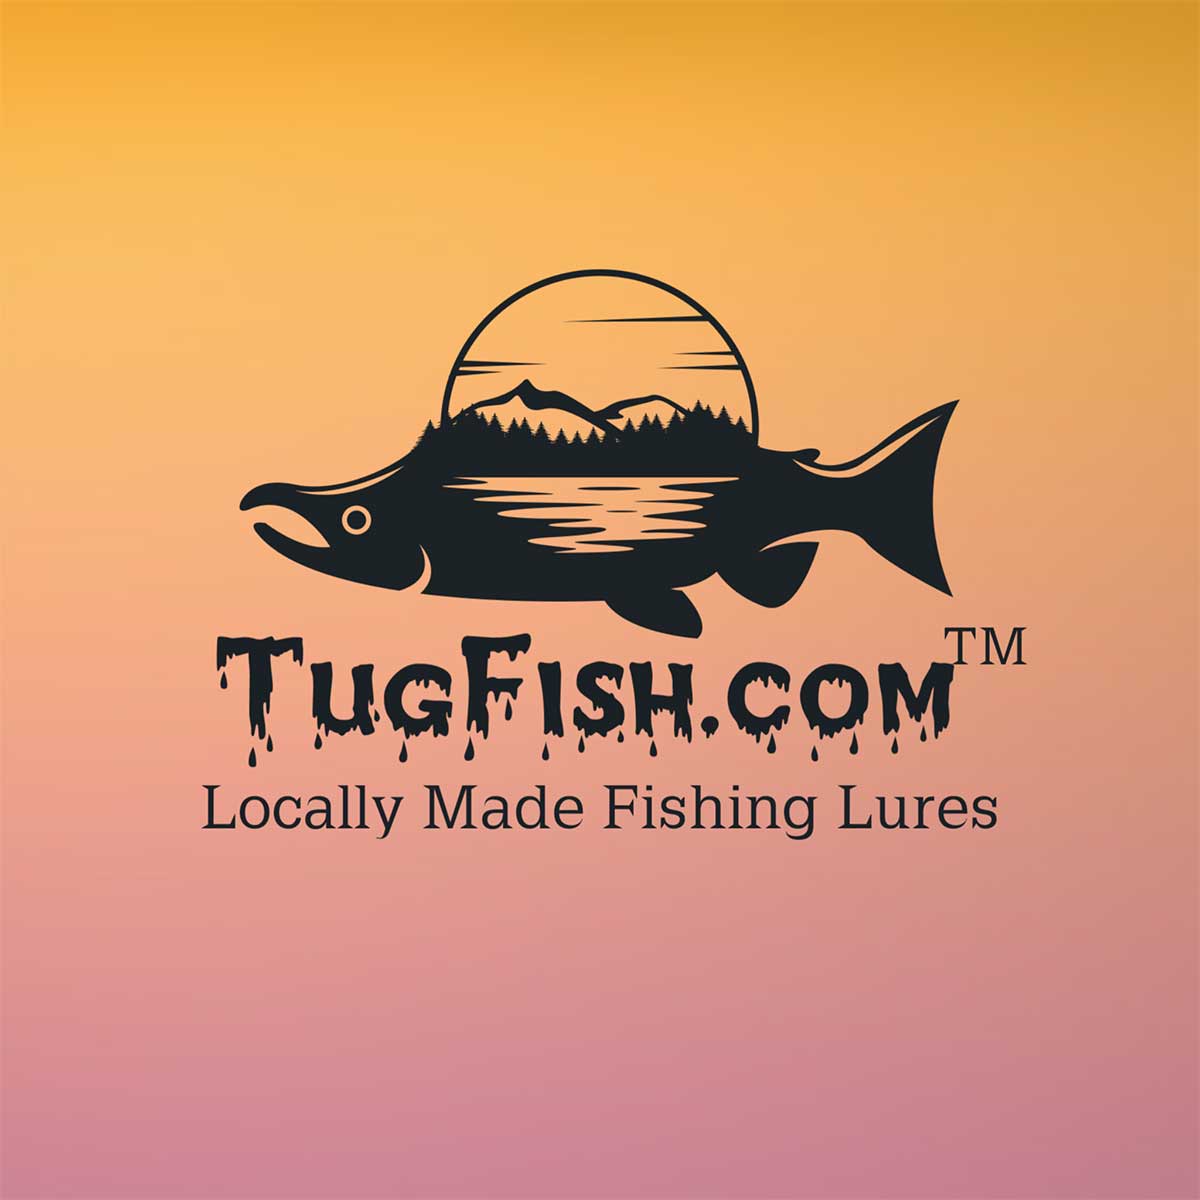 https://tugfish.com/wp-content/uploads/2021/08/Tugfish_Social.jpg